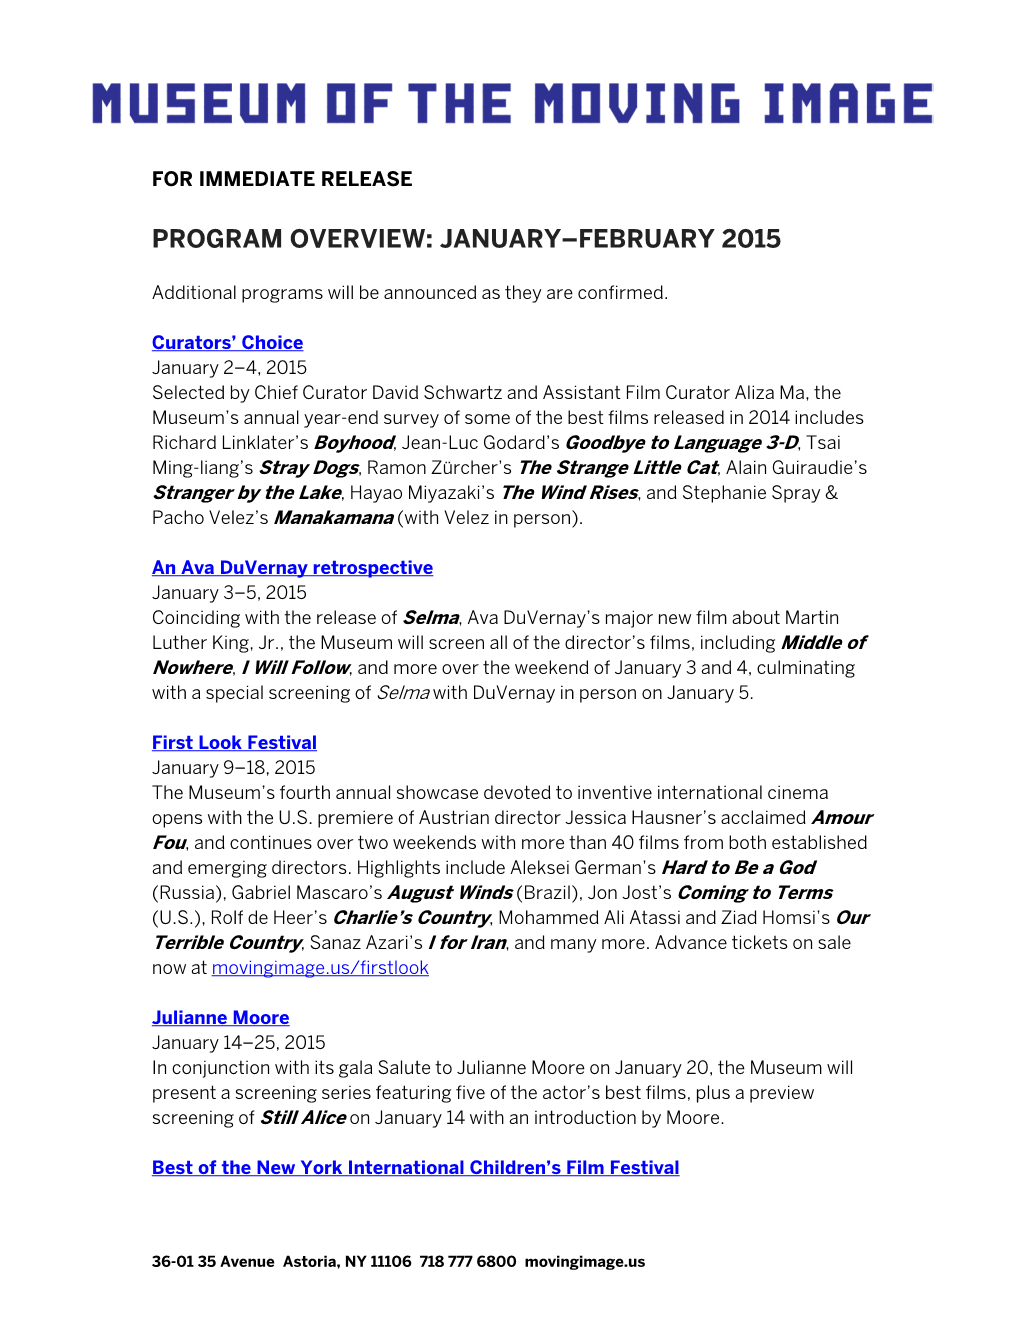 Program Overview: January–February 2015